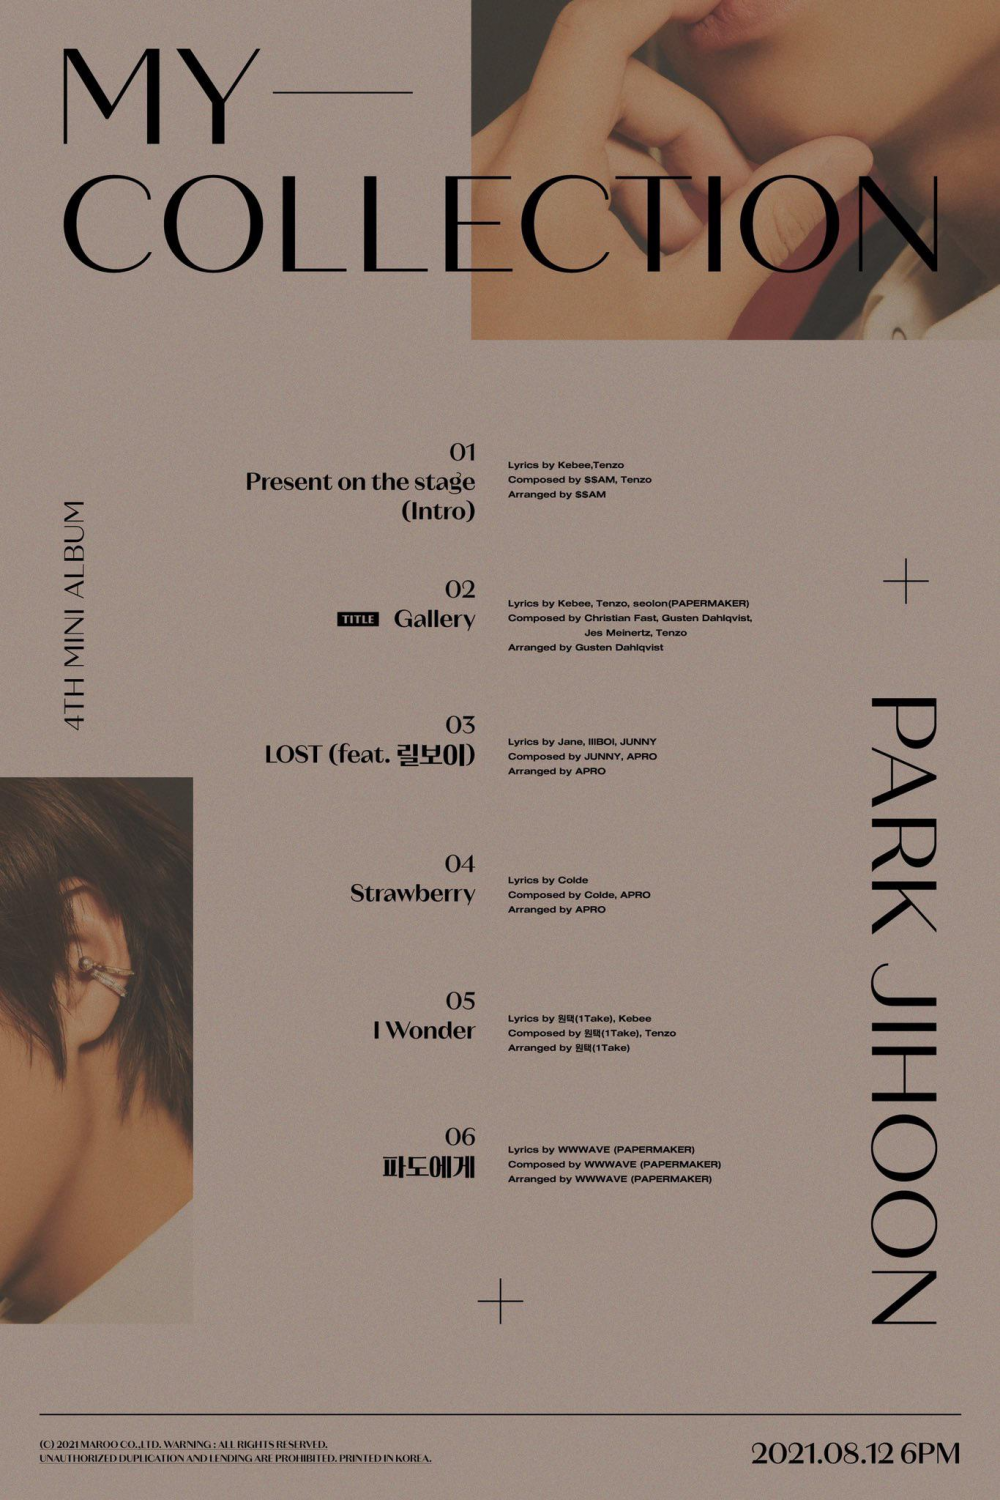 [Камбэк] Пак Джихун мини-альбом "My Collection": MV "Gallery"